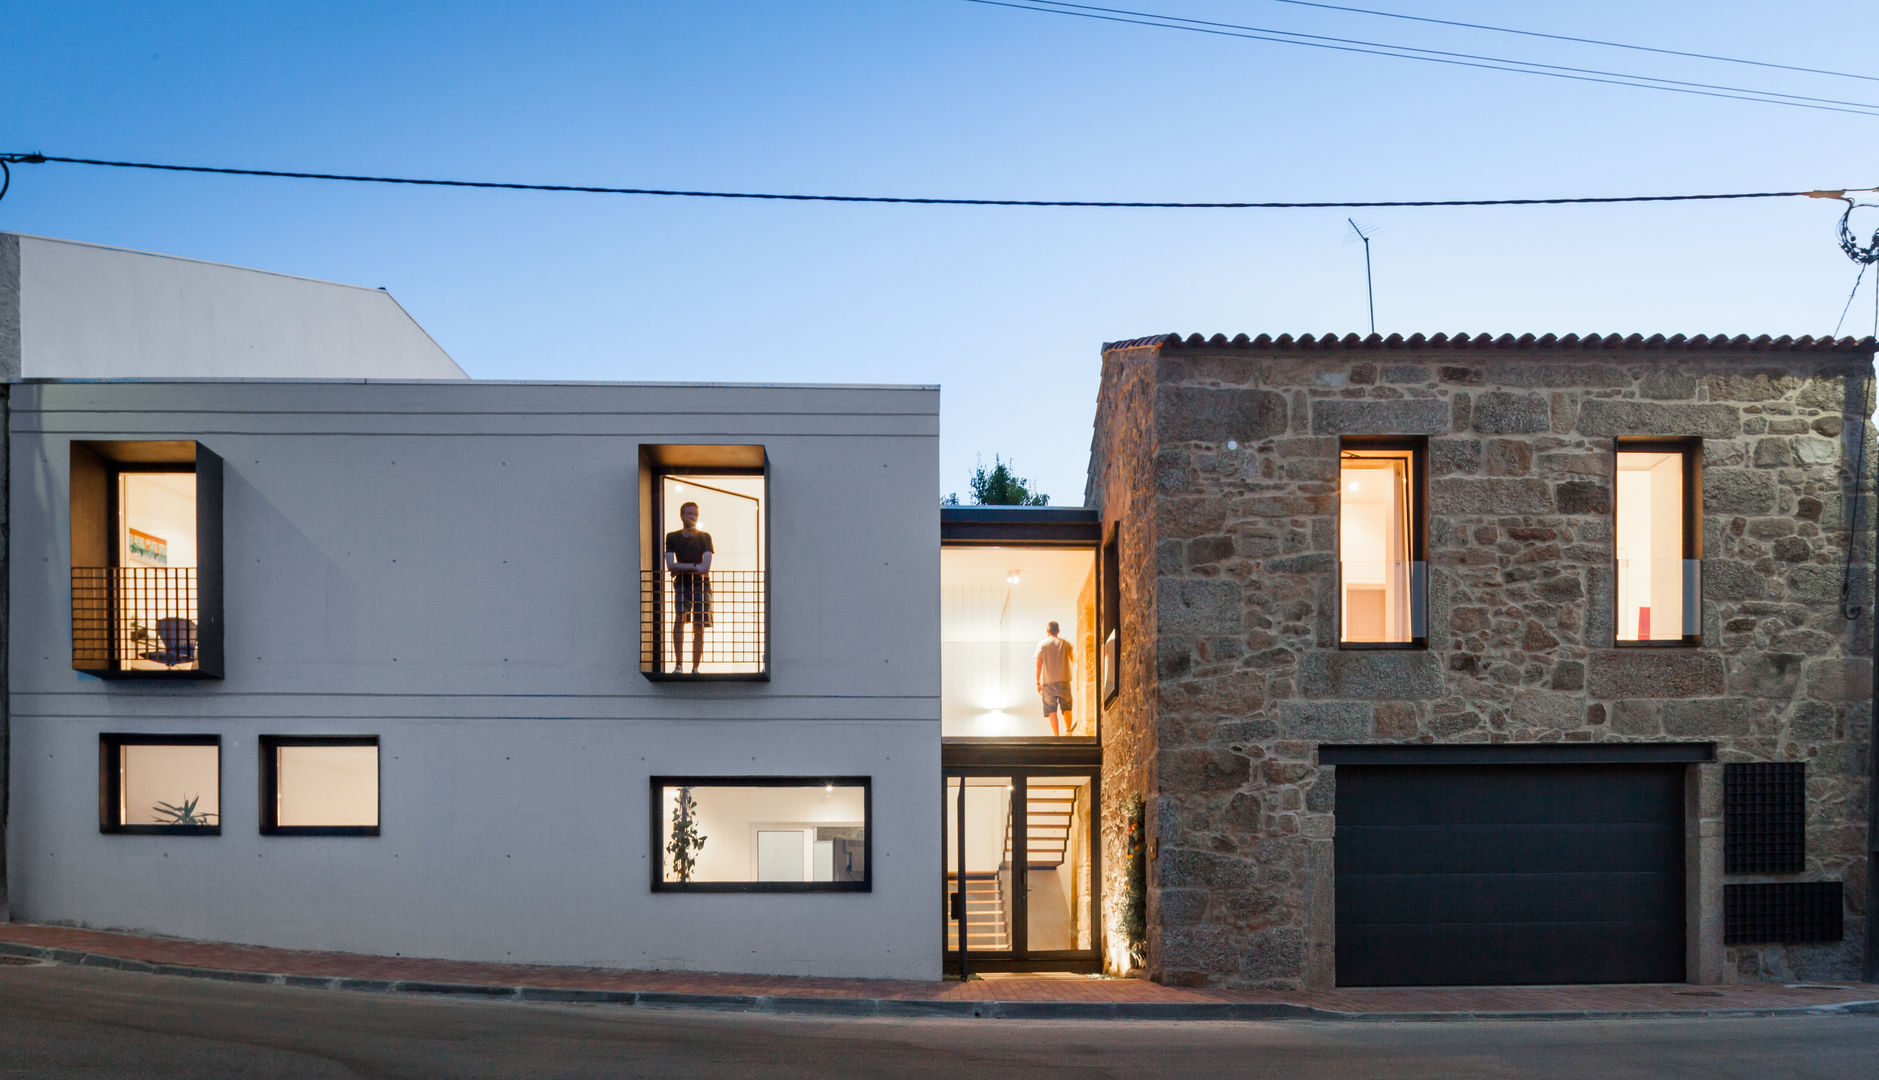 House JA - designed by Filipe Pina and Inês Costa., Joao Morgado - Architectural Photography Joao Morgado - Architectural Photography